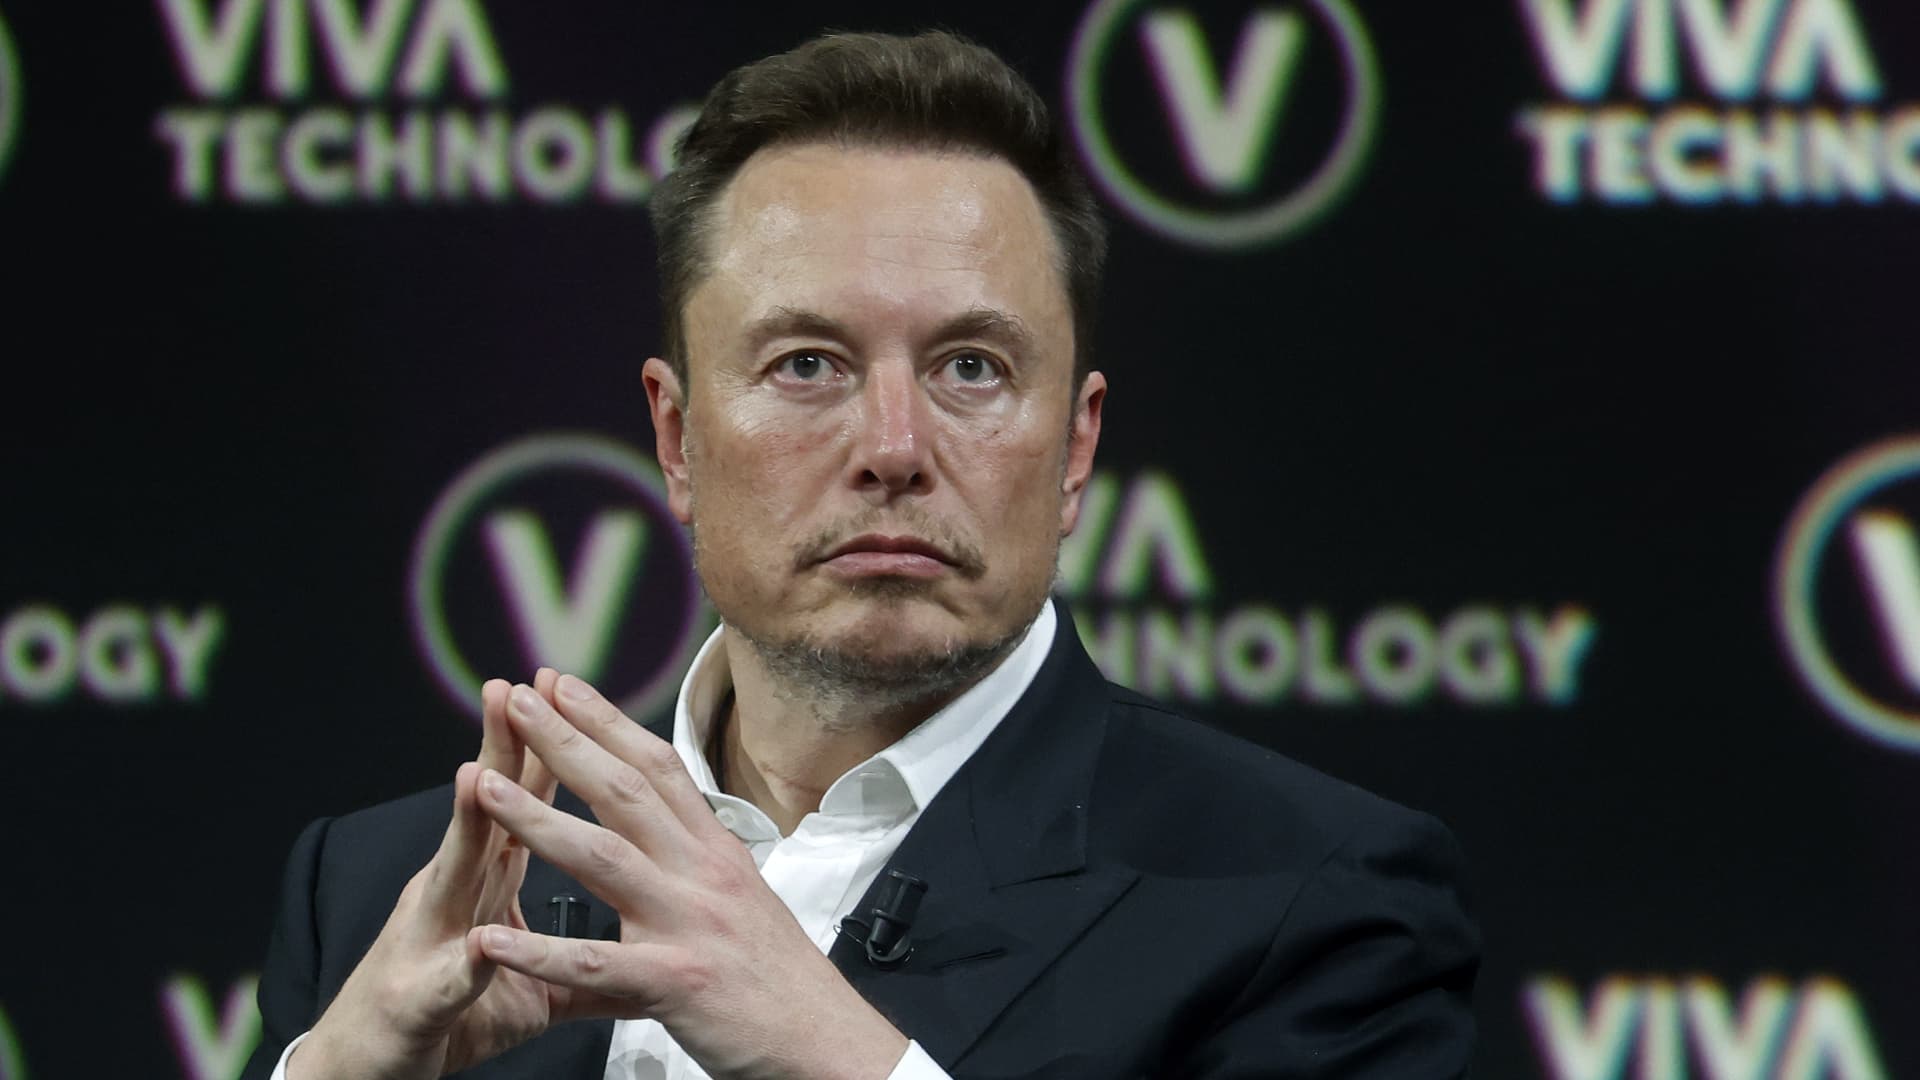 Elon Musk's Twitter files data-scraping lawsuit against unknown defendants